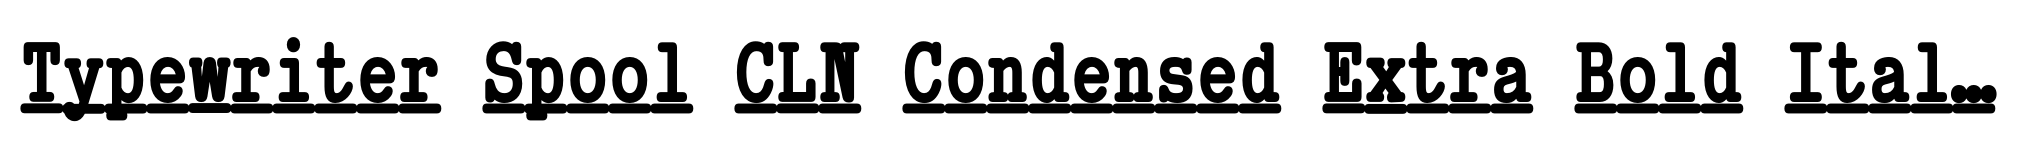 Typewriter Spool CLN Condensed Extra Bold Italic image